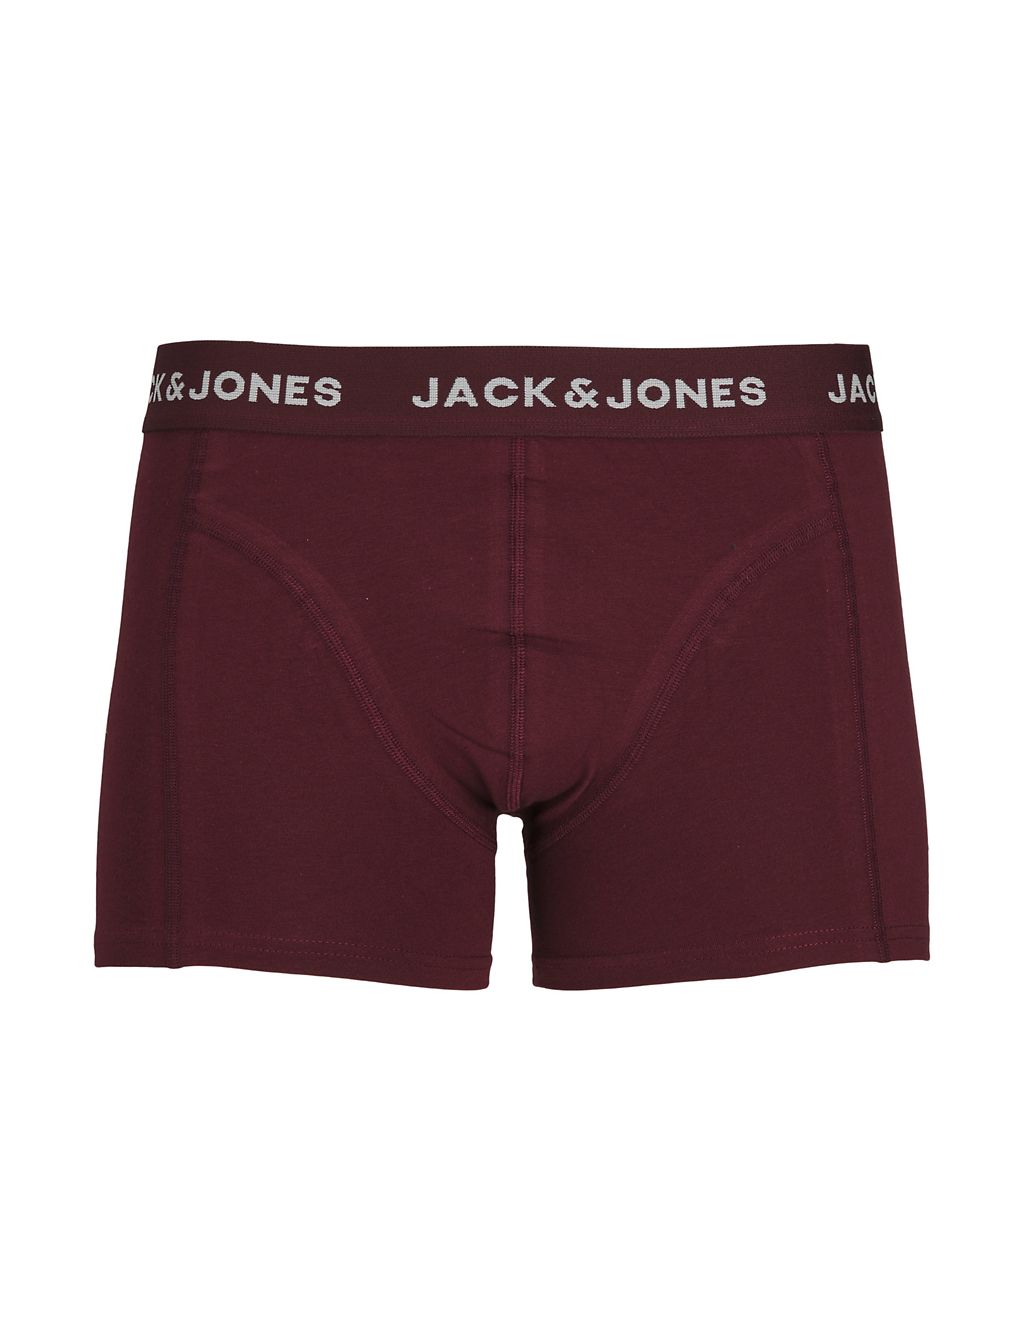 5pk Cotton Stretch Trunks | JACK & JONES | M&S